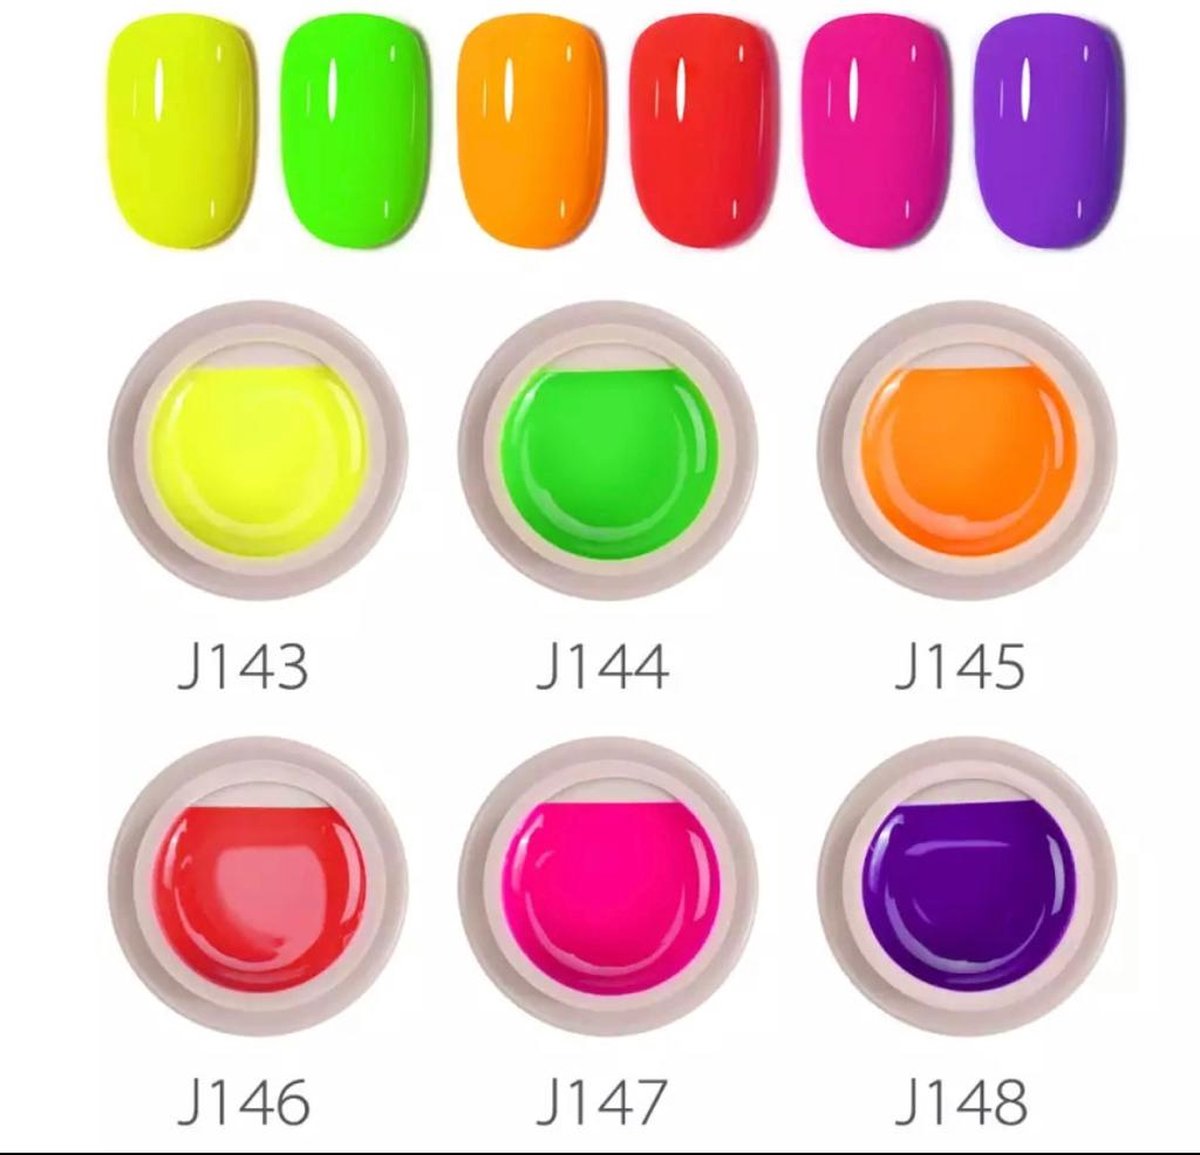 Neon gellak pakket - 6 neon kleuren - 5ml - Nailart - Nepnagels - Gellak potje - Nagelstyliste - Manicure - Gellack nagels